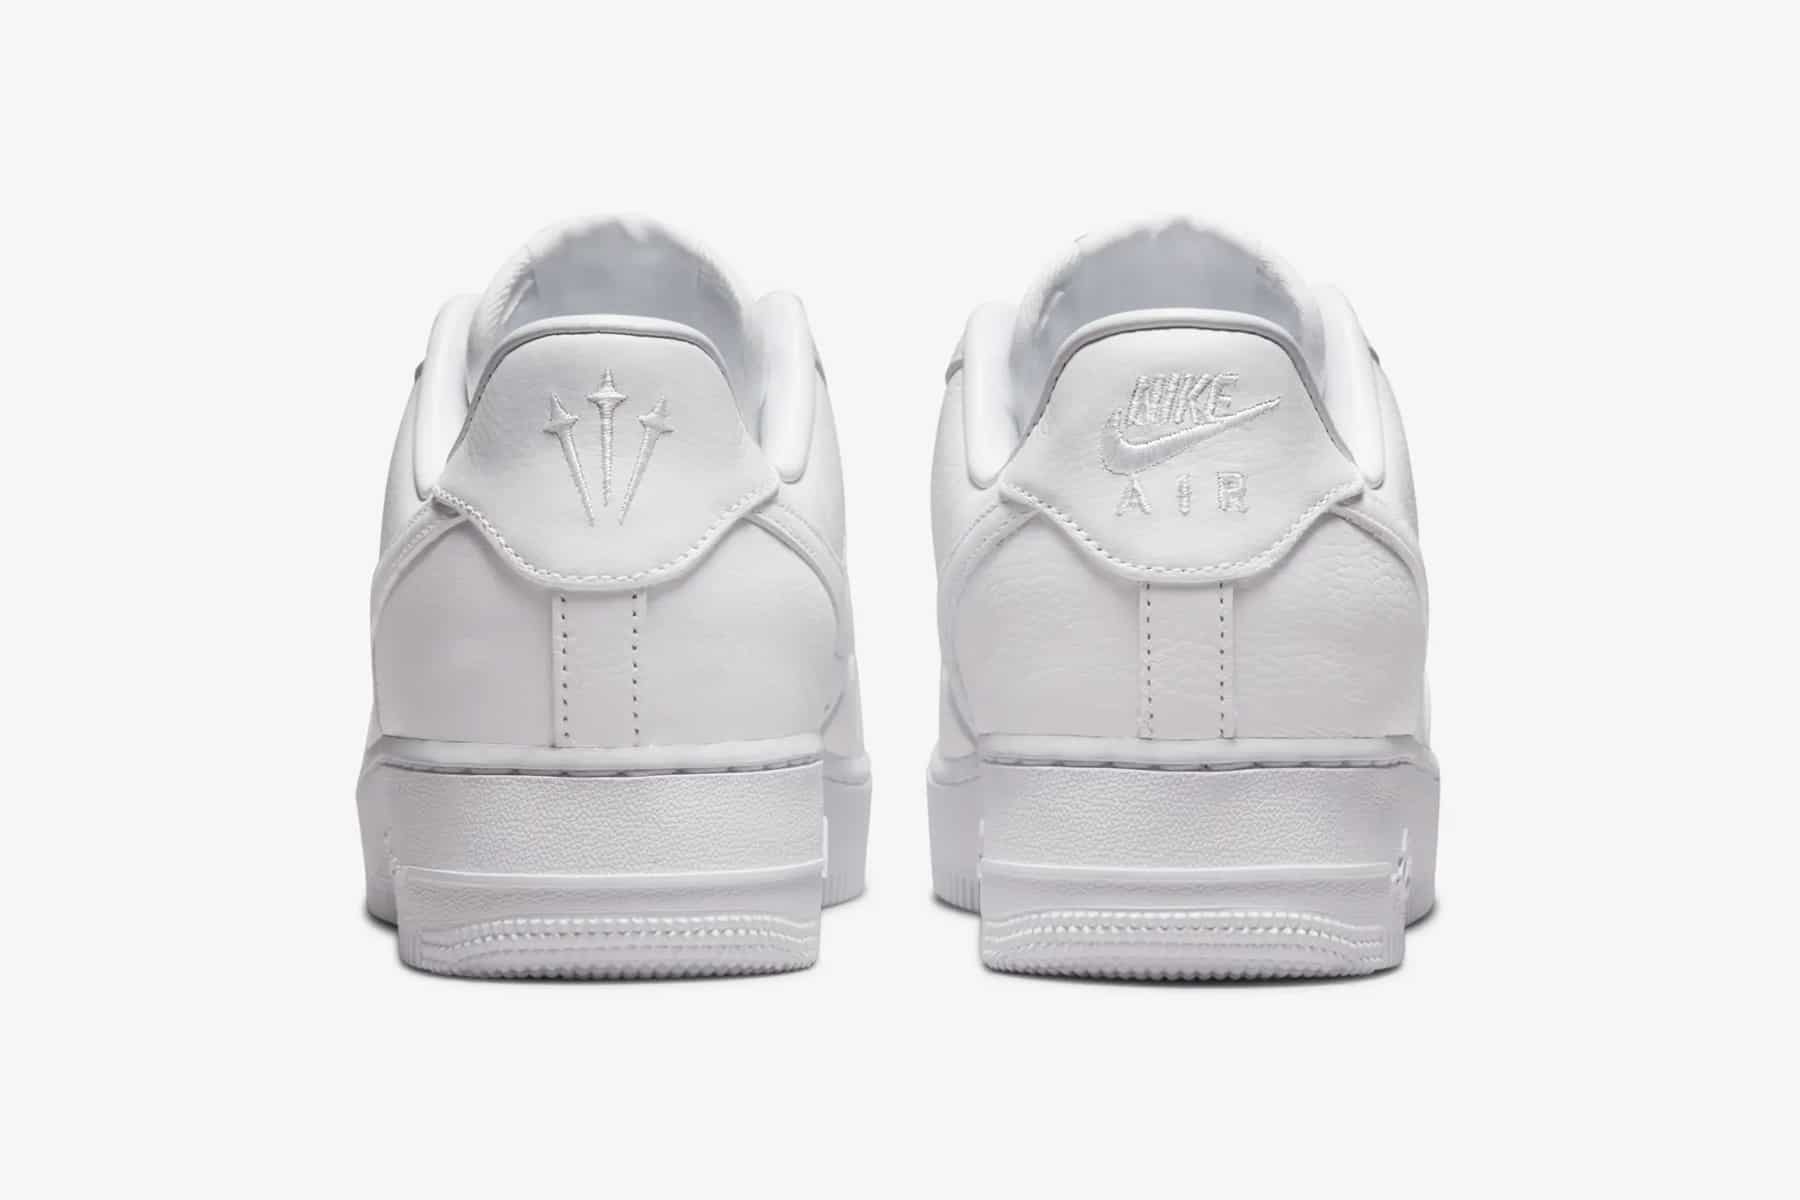 Drake NOCTA Nike Air Force 1 Low Certified Lover Boy White